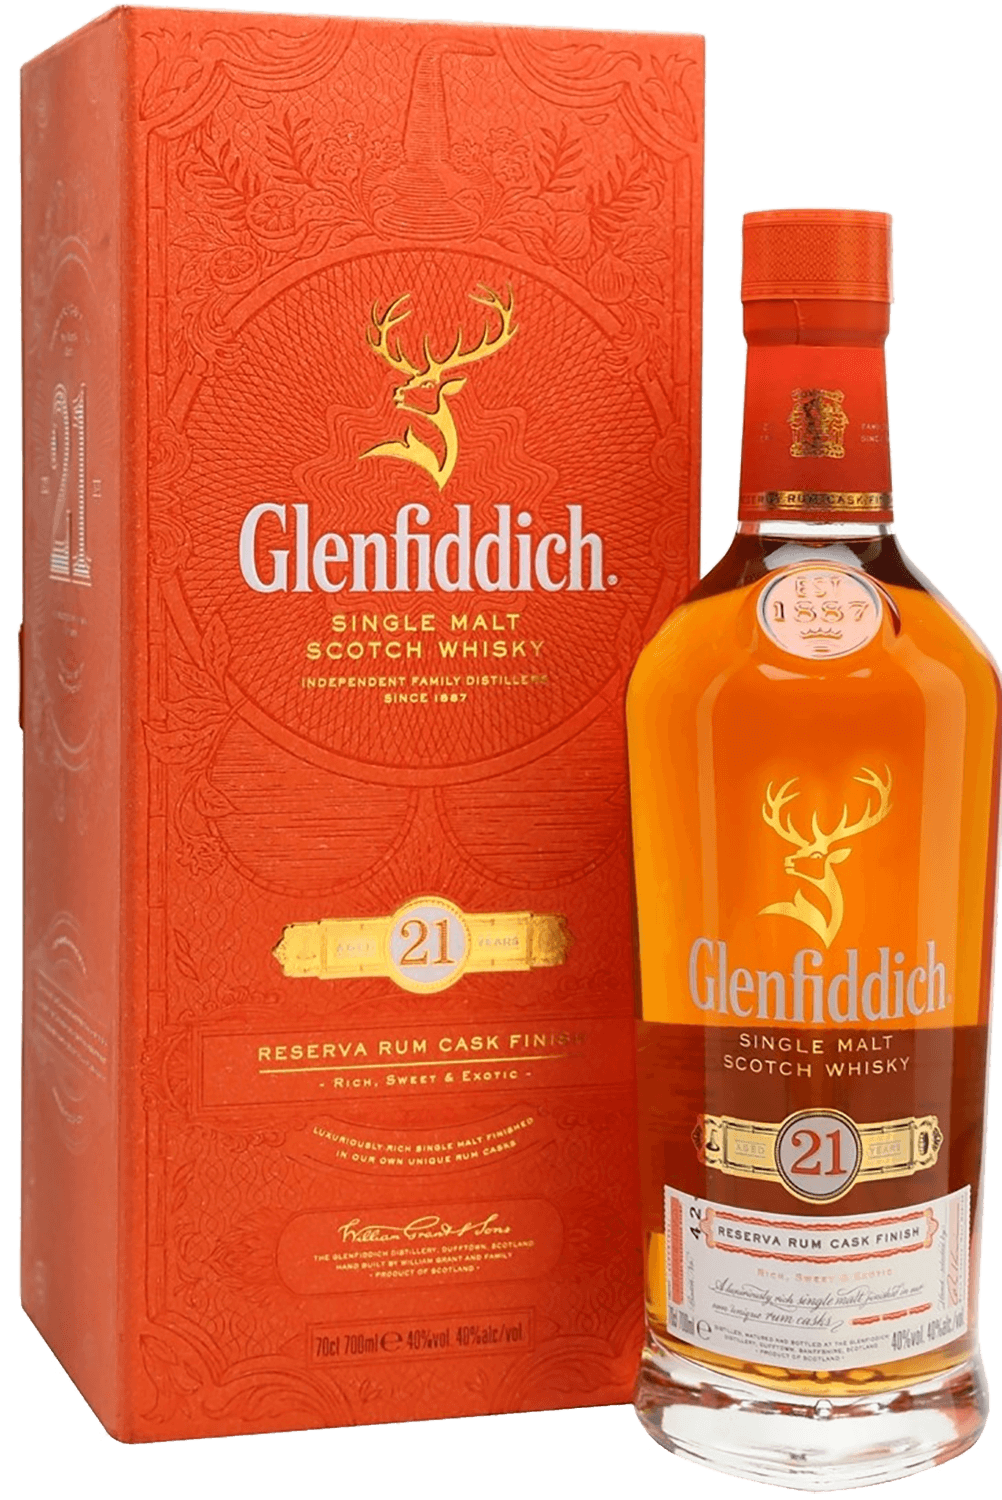 Glenfiddich Single Malt Scotch Whisky 21 yo (gift box) glenfiddich single malt scotch whisky 12 y o gift box